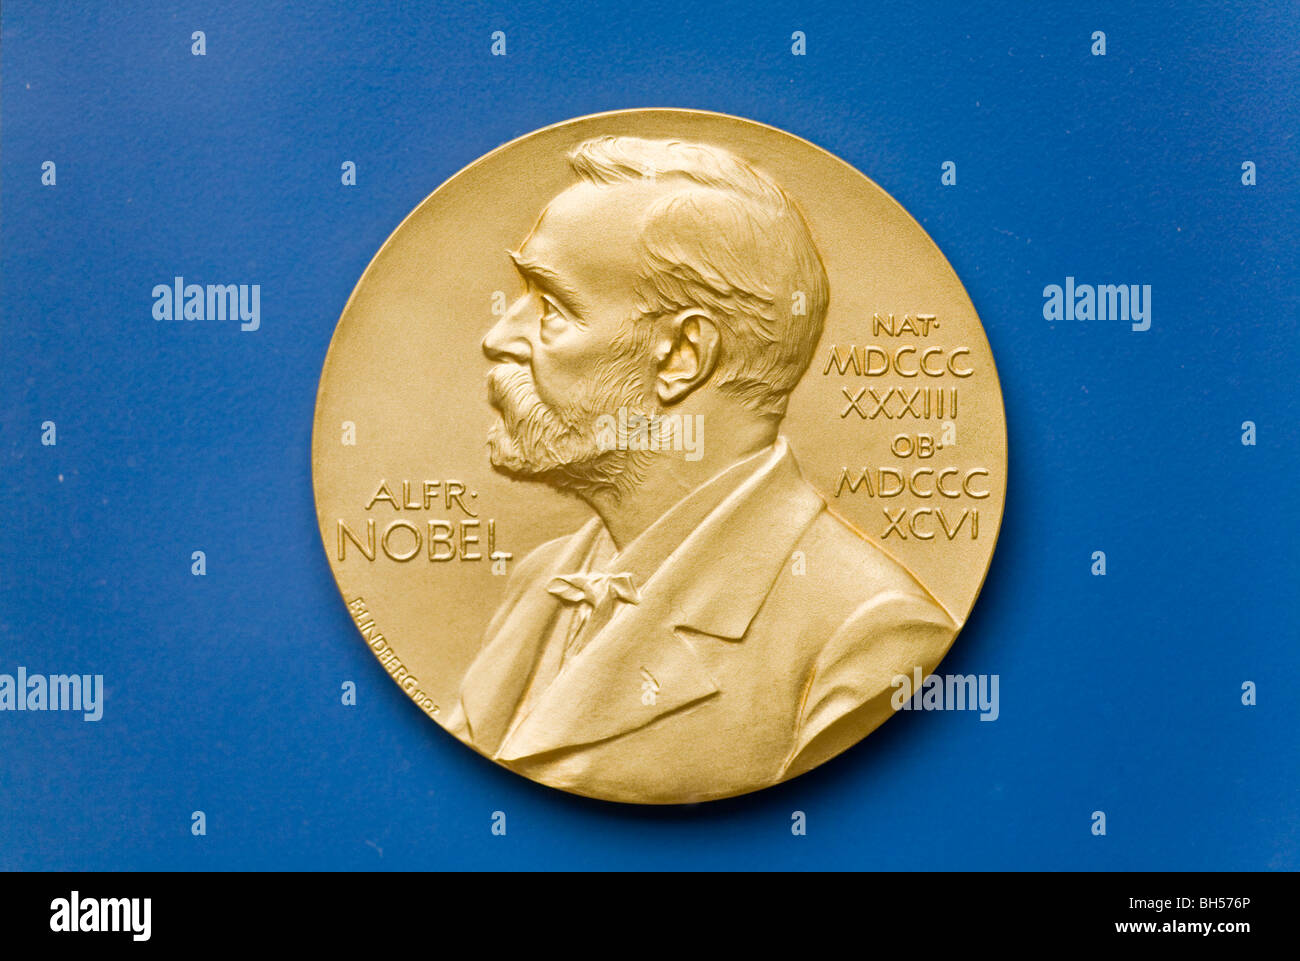 Nobel prize medal front Stock Photo